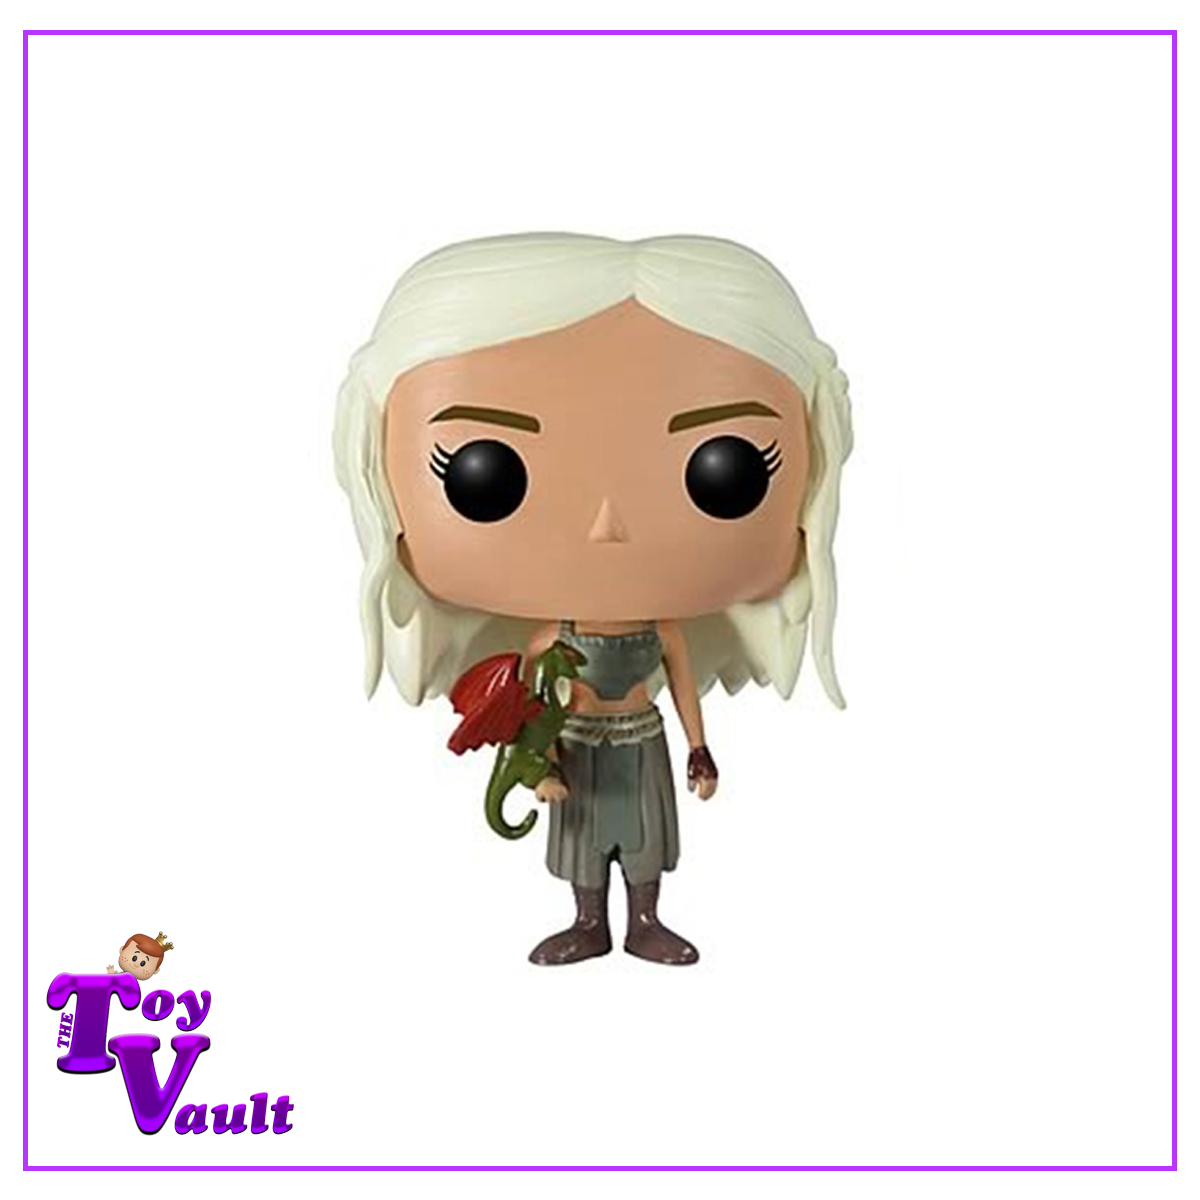 Funko Pop! Television Game of Thrones - Daenerys Targaryen with Dragon #03